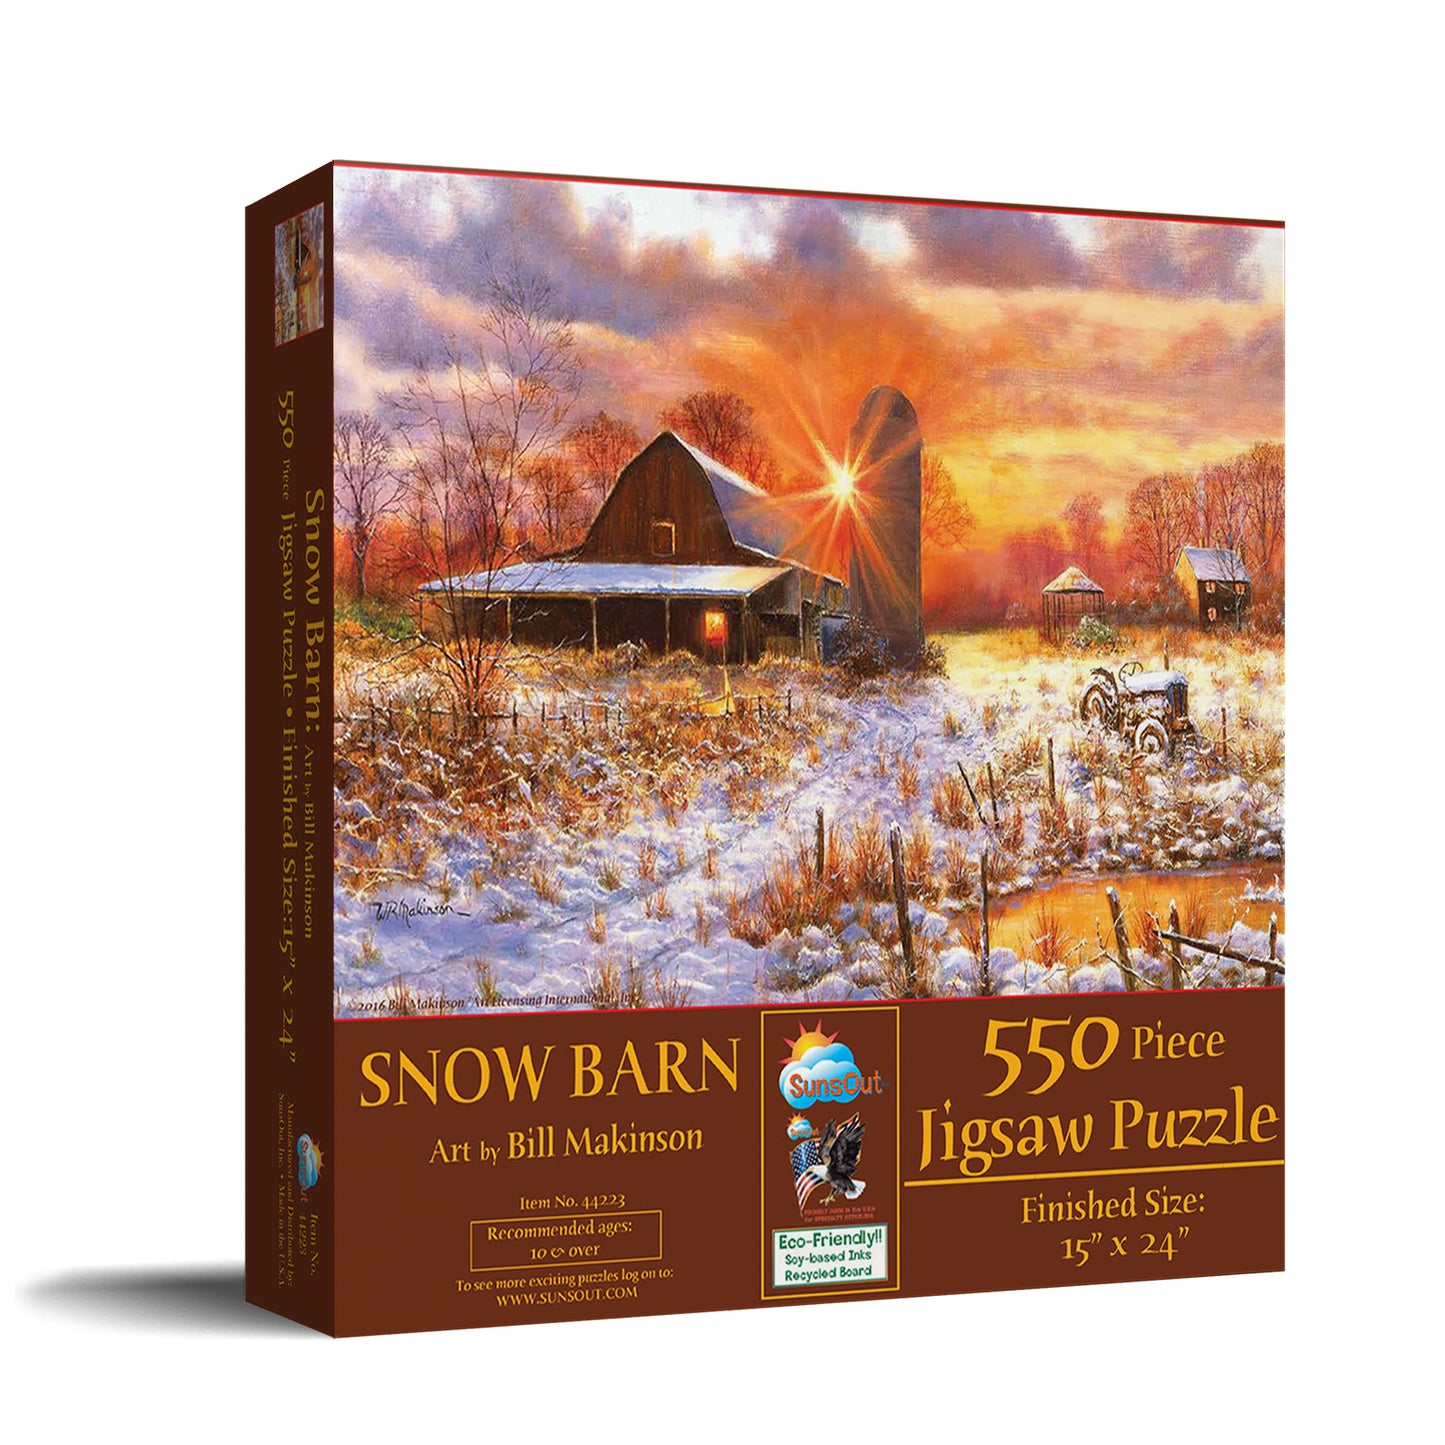 Snow Barn - 550 Piece Jigsaw Puzzle